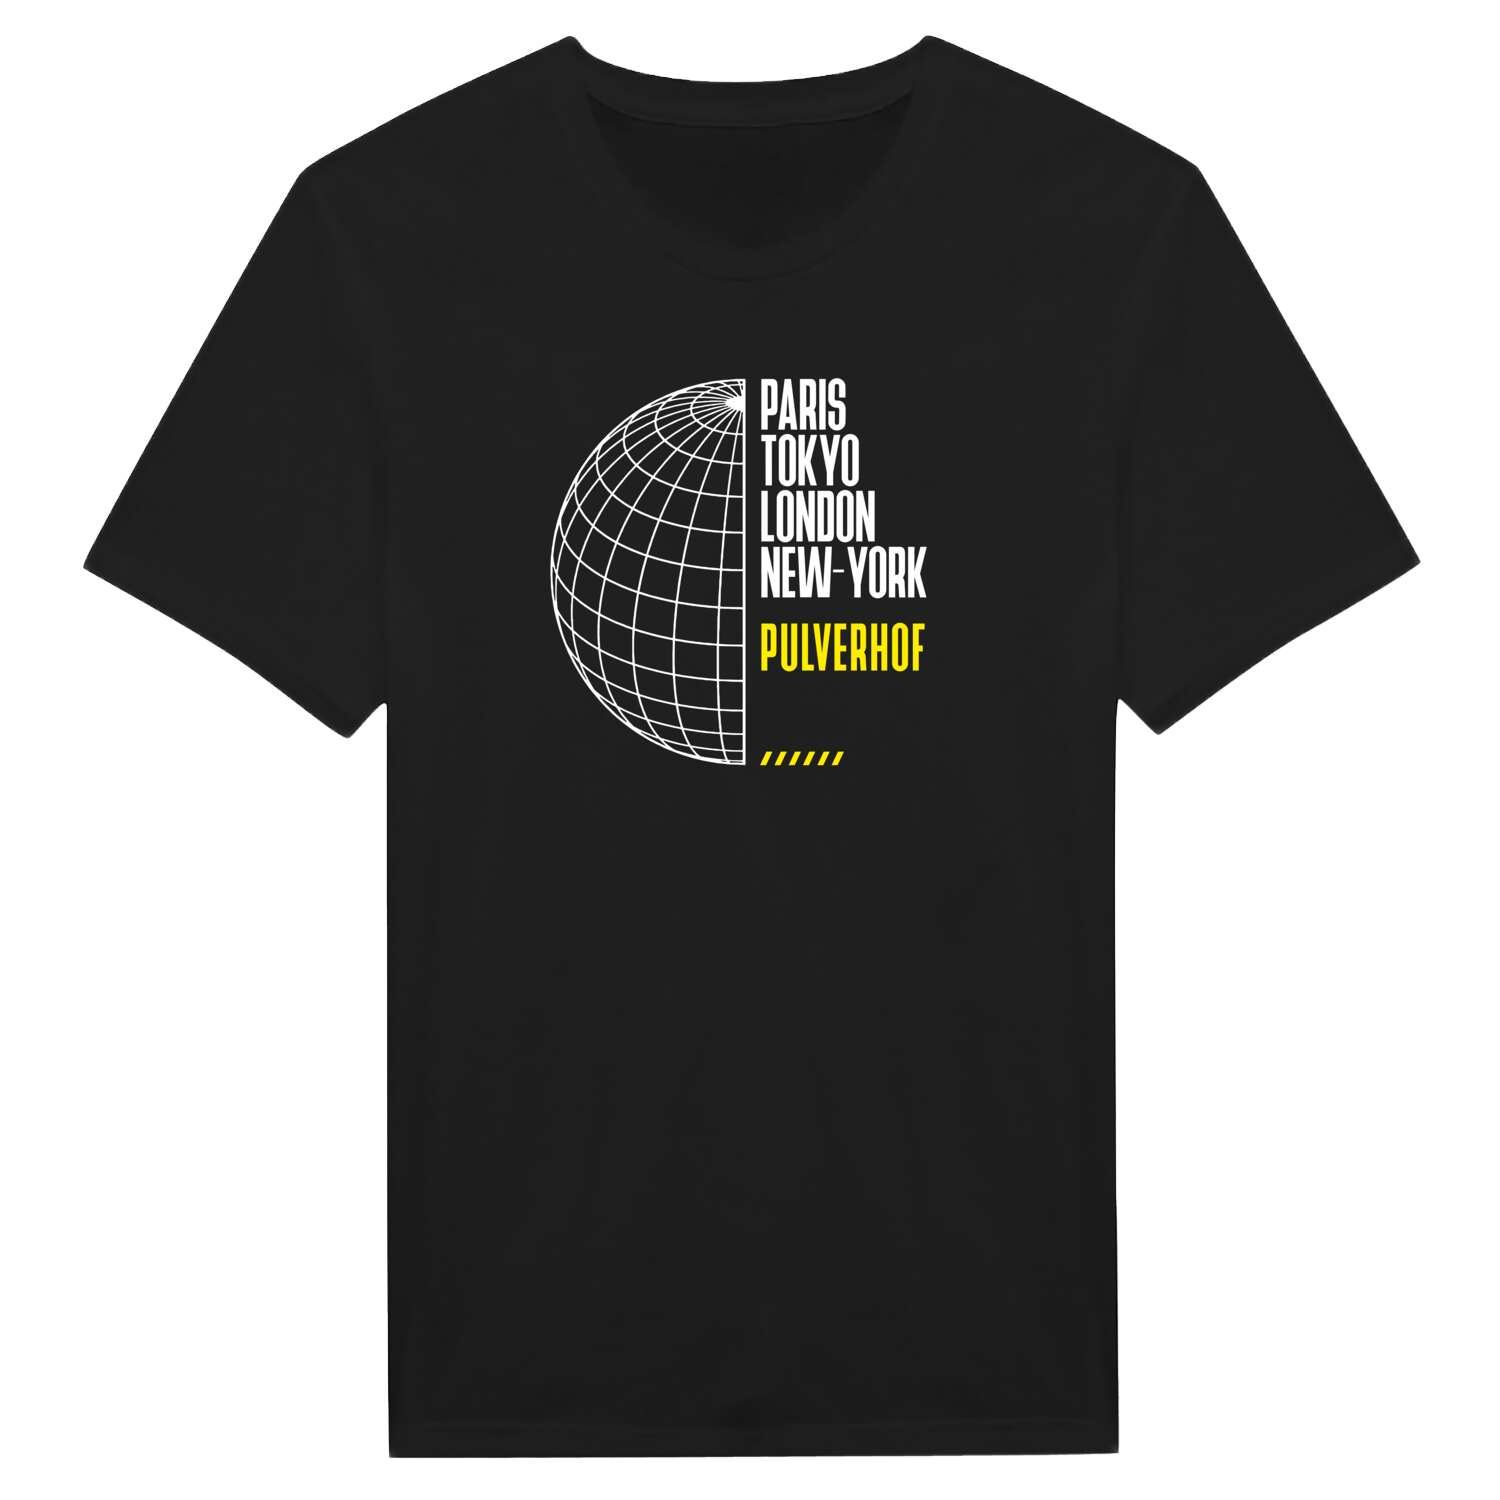 Pulverhof T-Shirt »Paris Tokyo London«